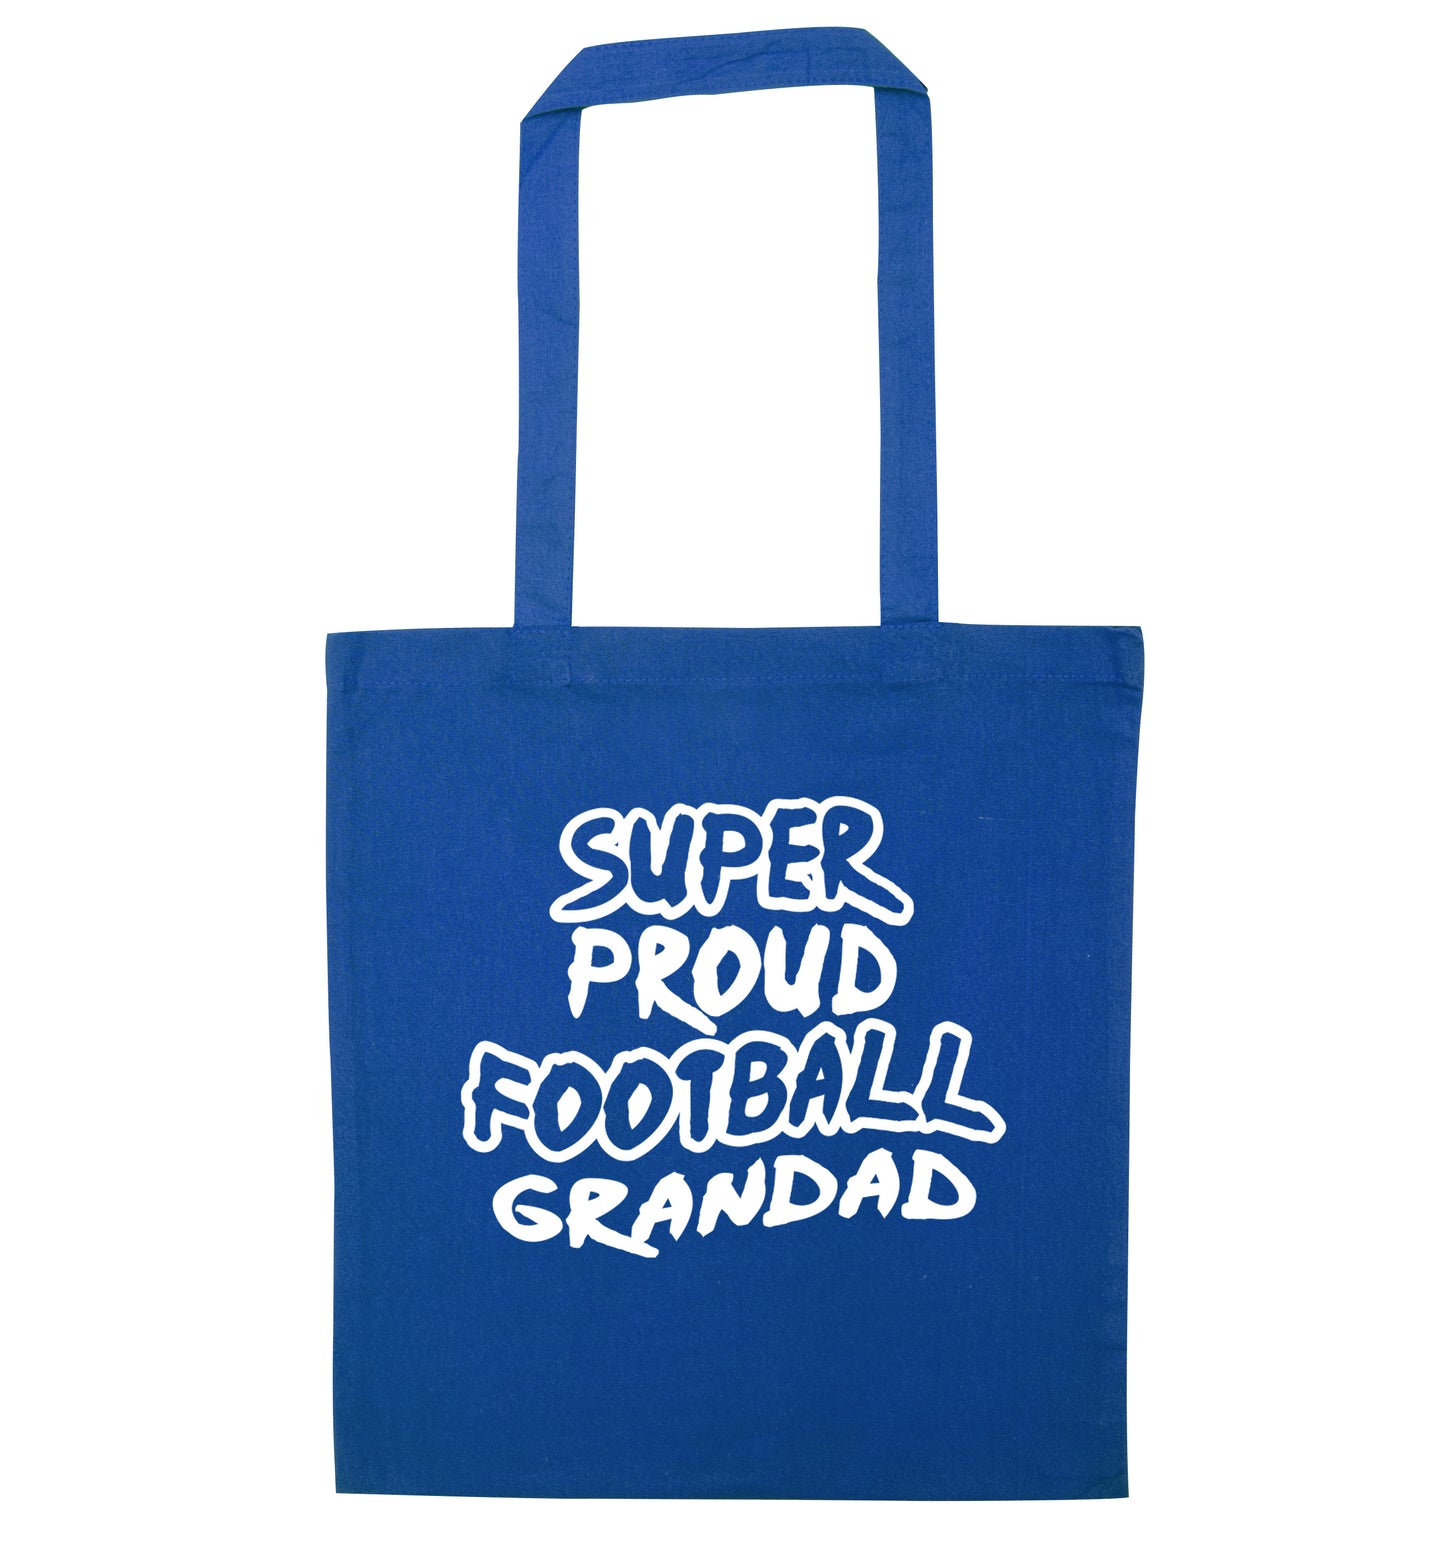 Super proud football grandad blue tote bag